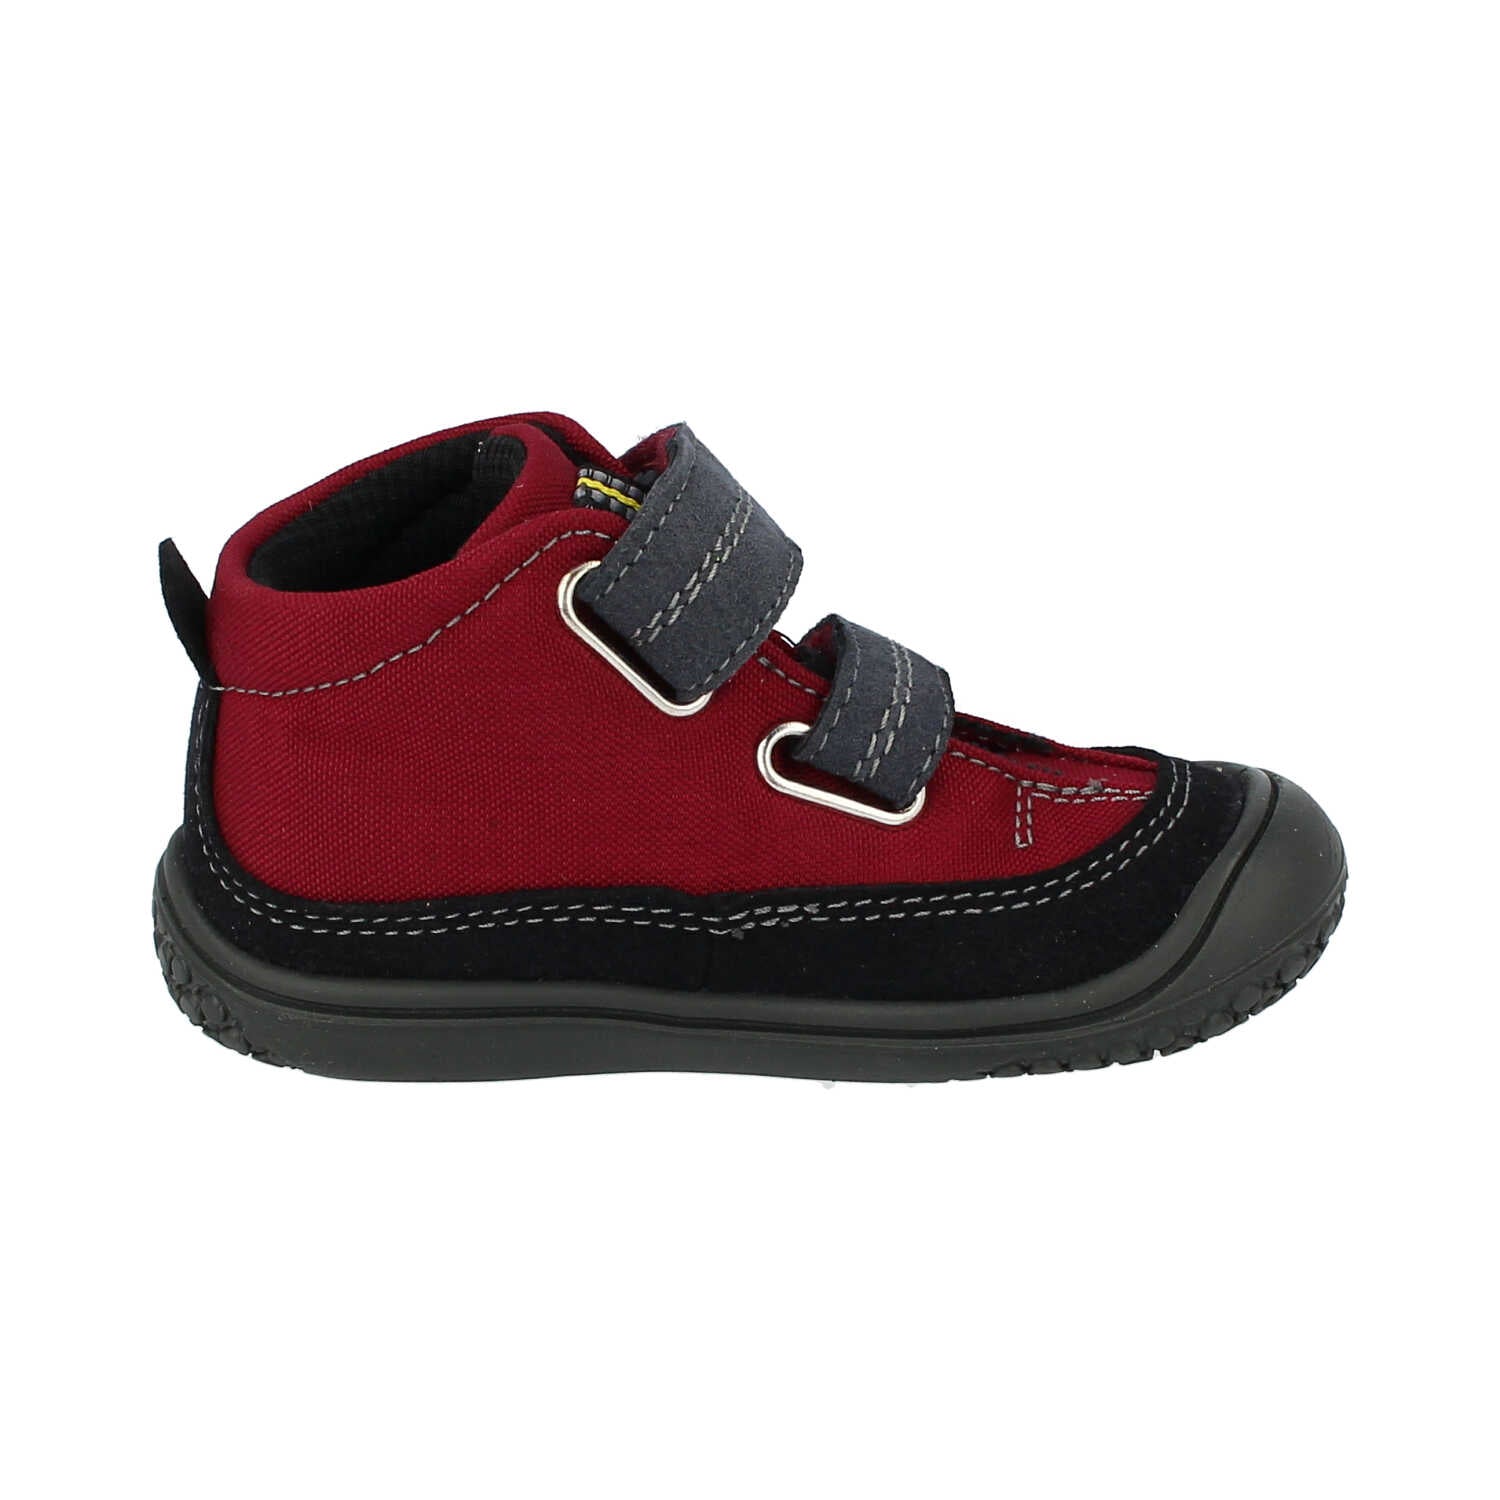 Filii Viper Velcro "Medium" barfods high sneakers til børn i farven berry, inderside